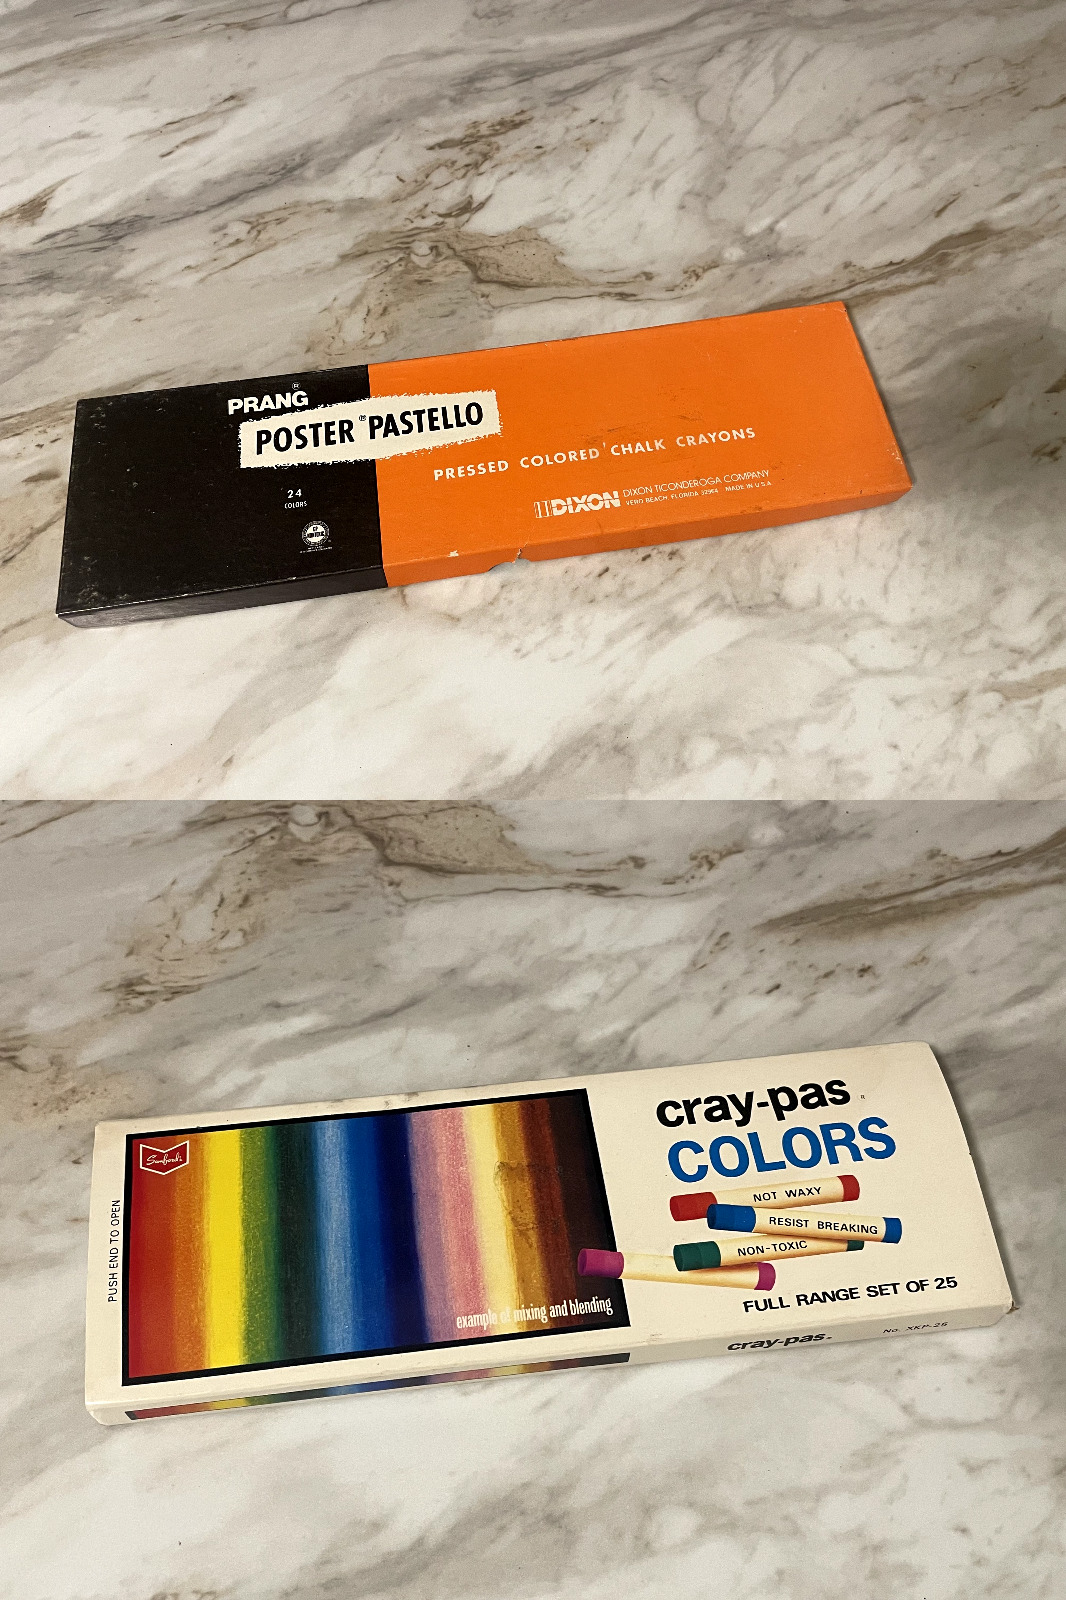 Prang Poster Pastello Chalk Crayons & Cray-Pas Colors Vintage Bulk Lot (2) Sets